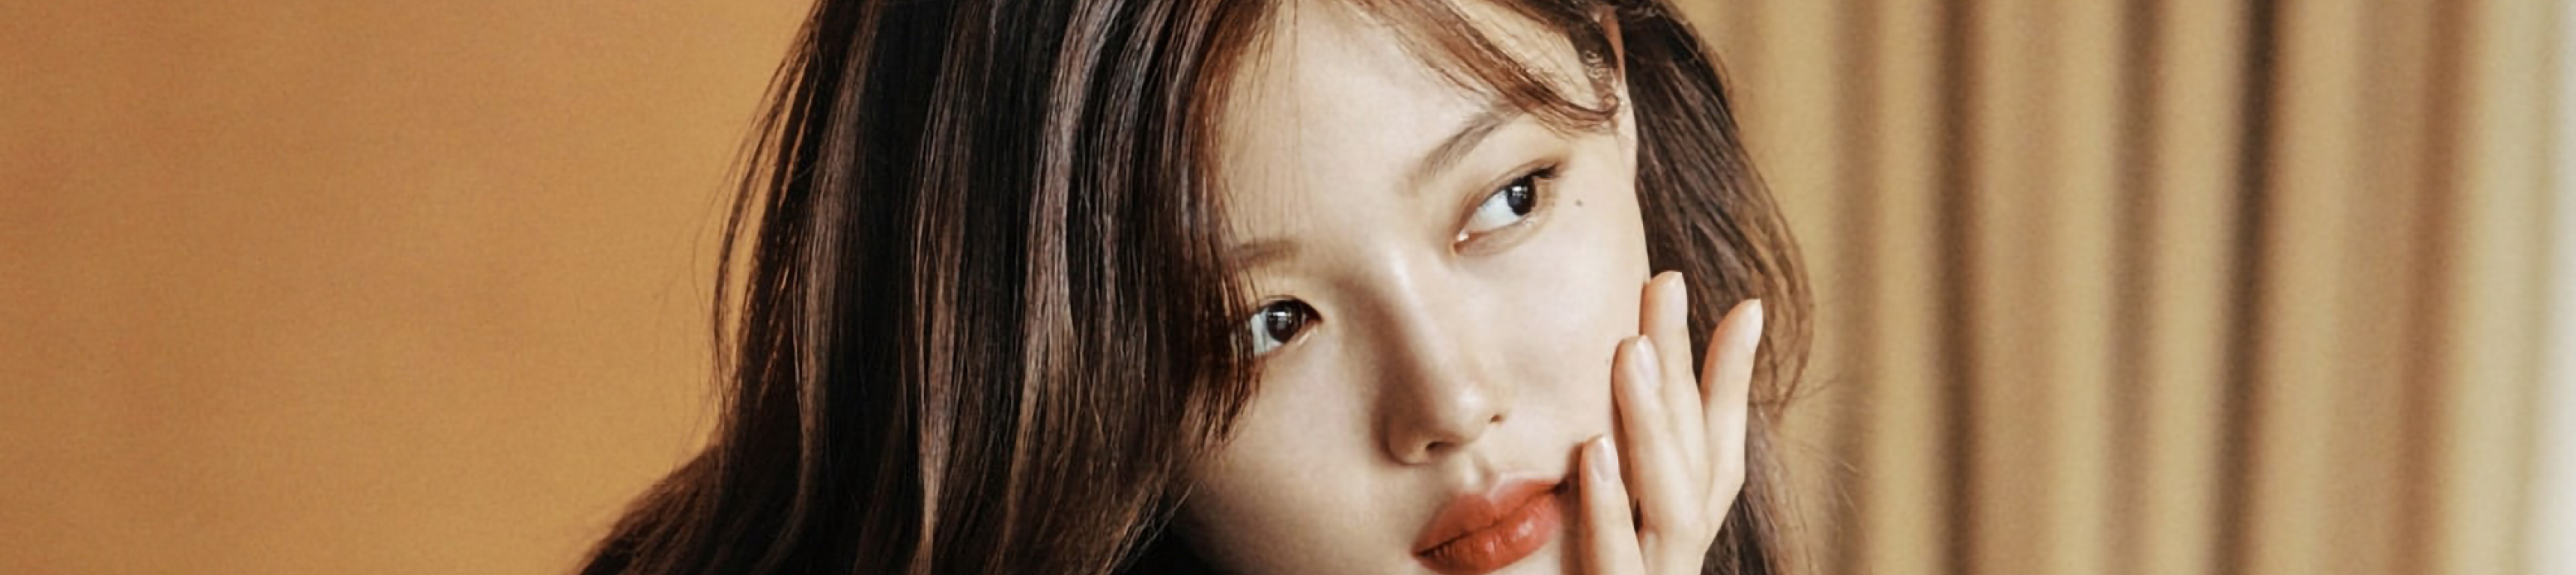 X Kim Yoo Jung Actress X Resolution Wallpaper Hd Celebrities K Wallpapers